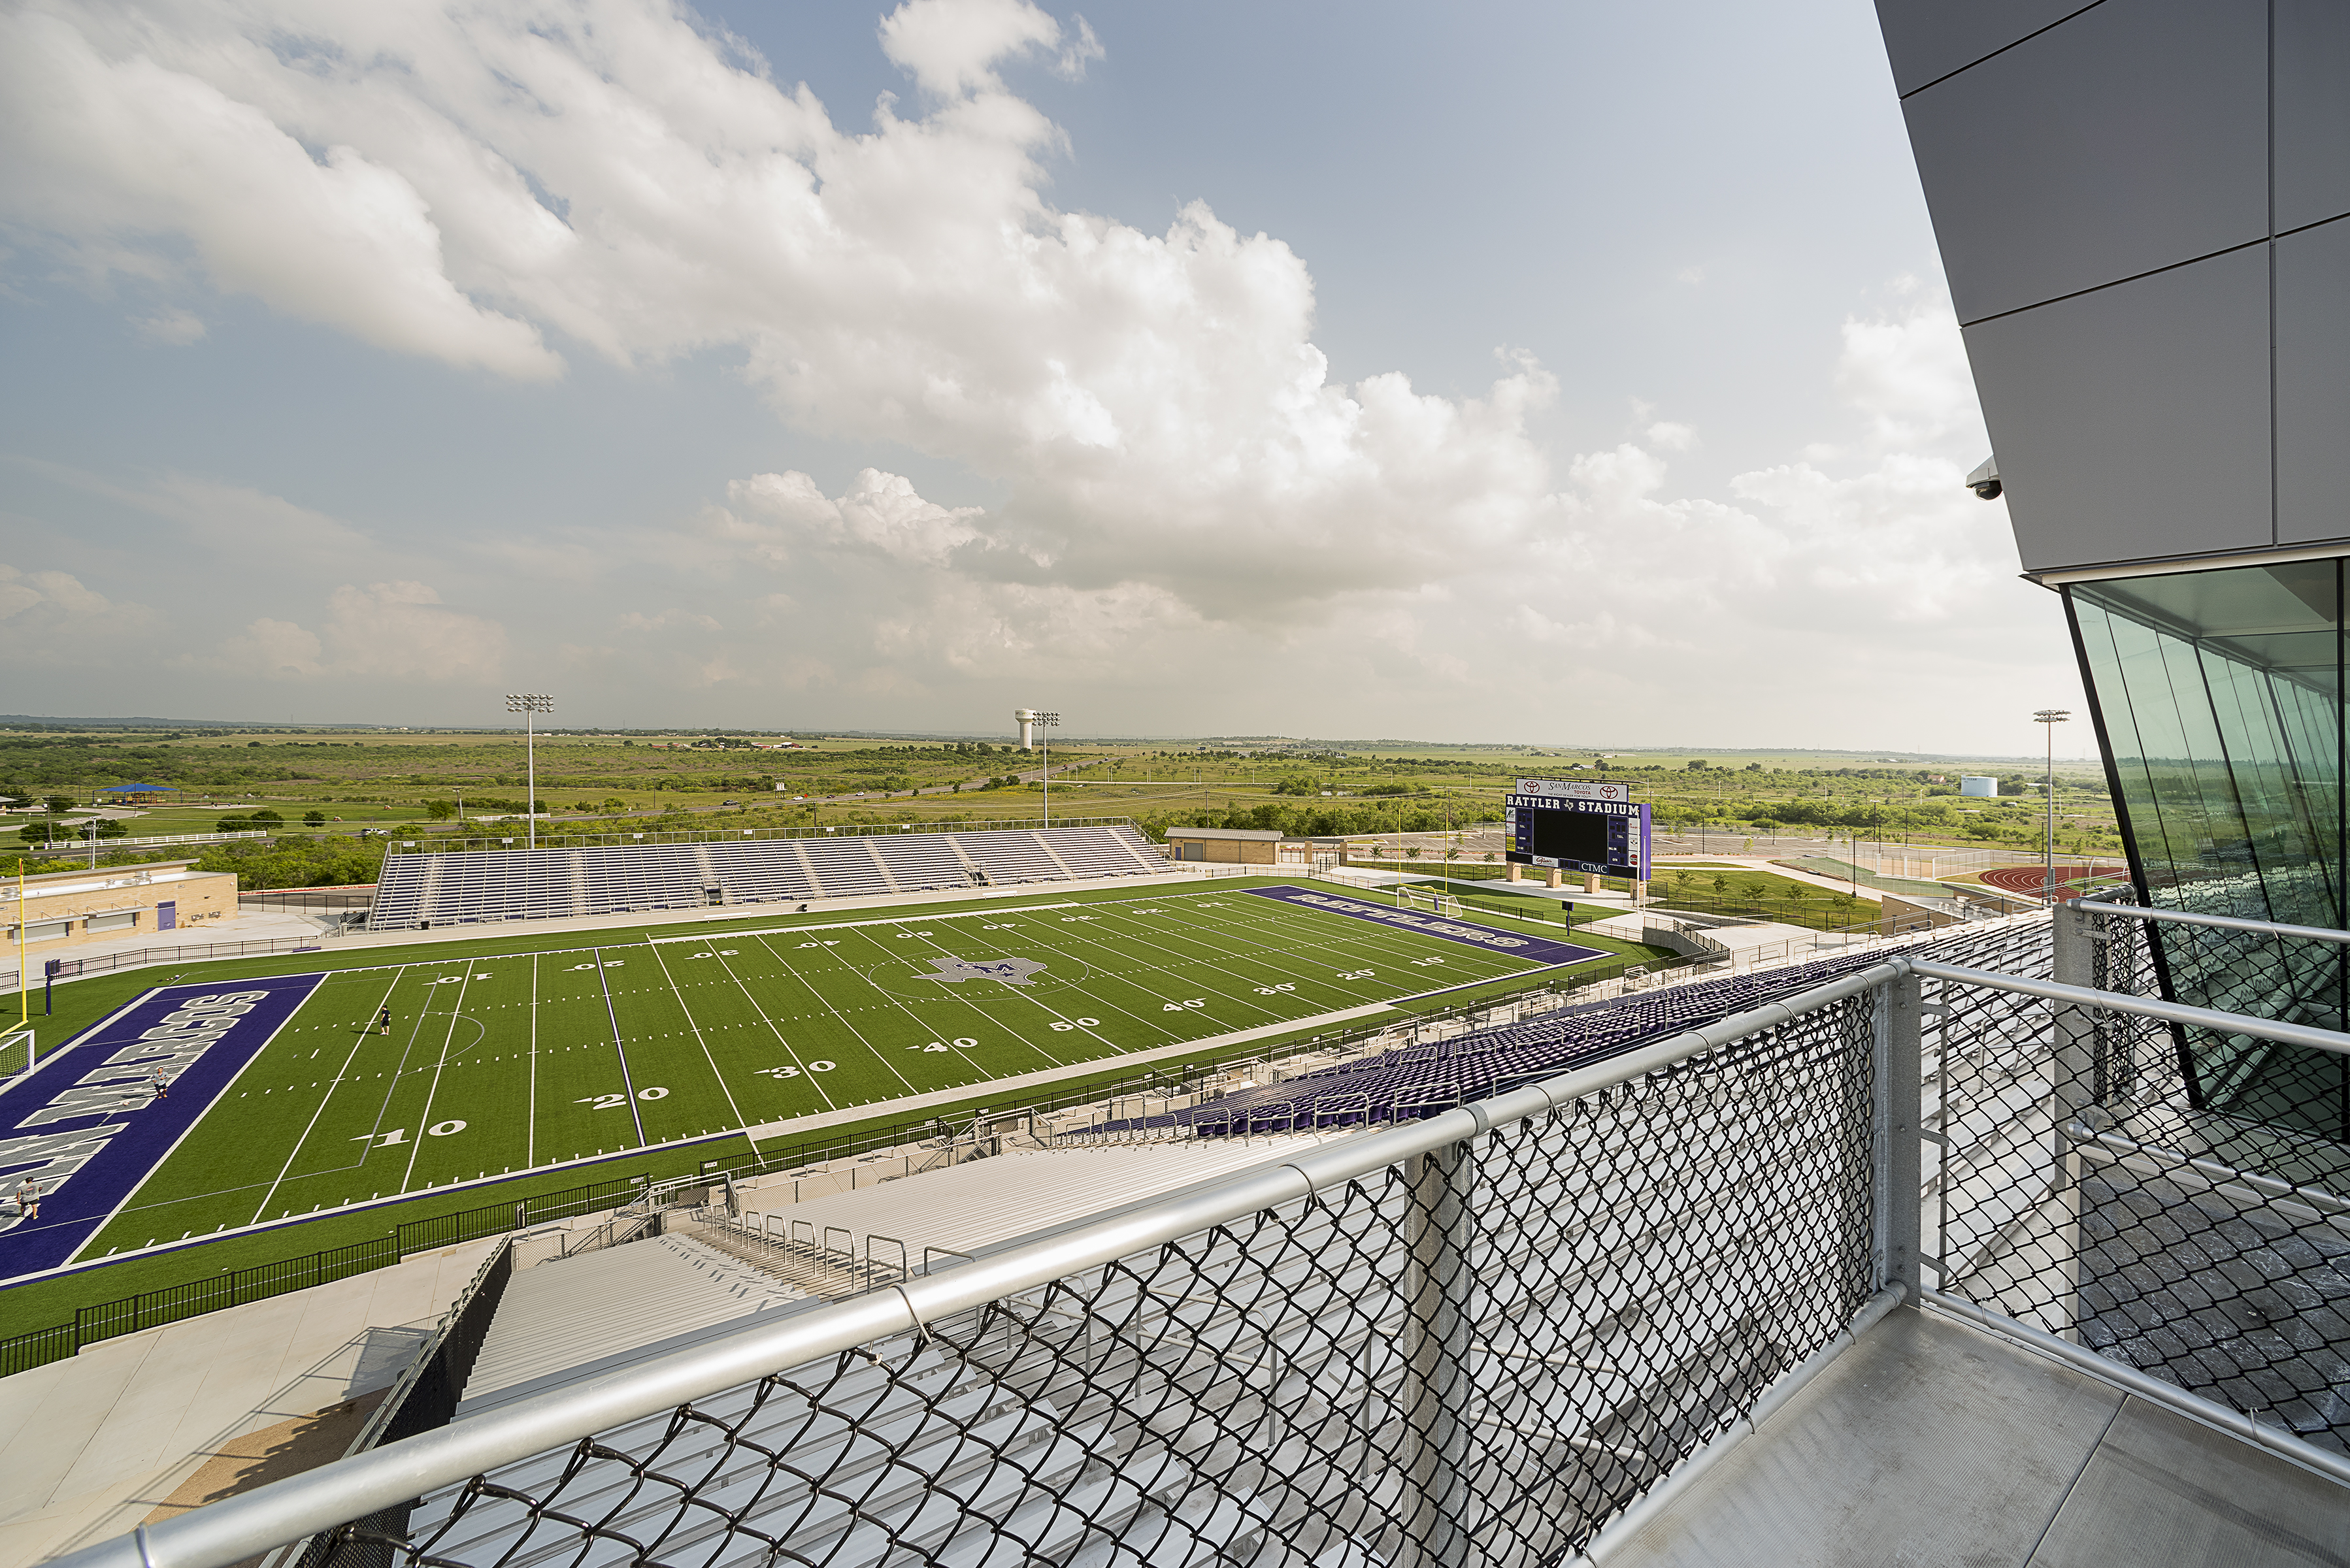  San Marcos CISD | Multipurpose Athletic Stadium & Activity Center category